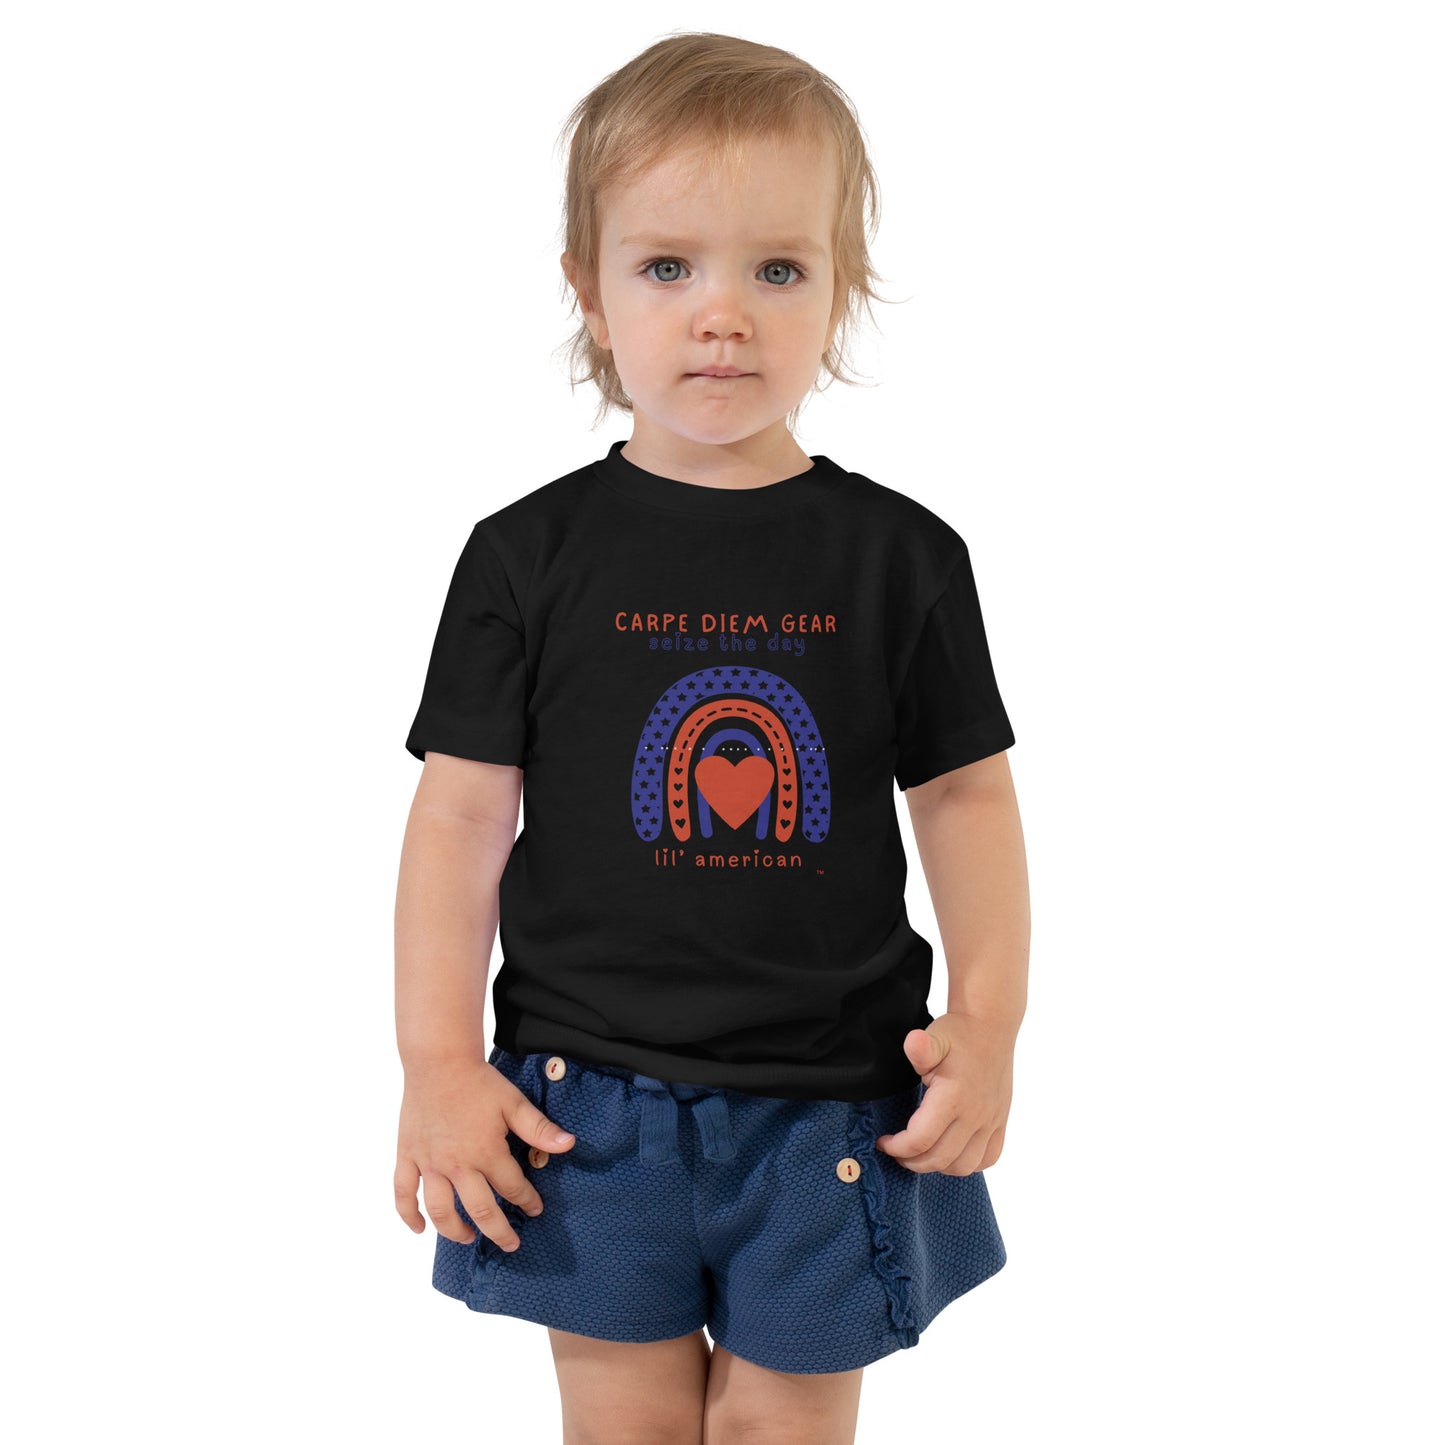 Carpe Diem Gear | America  | Lil' American | Toddler Short Sleeve T-Shirt 100% Ring-Spun Cotton